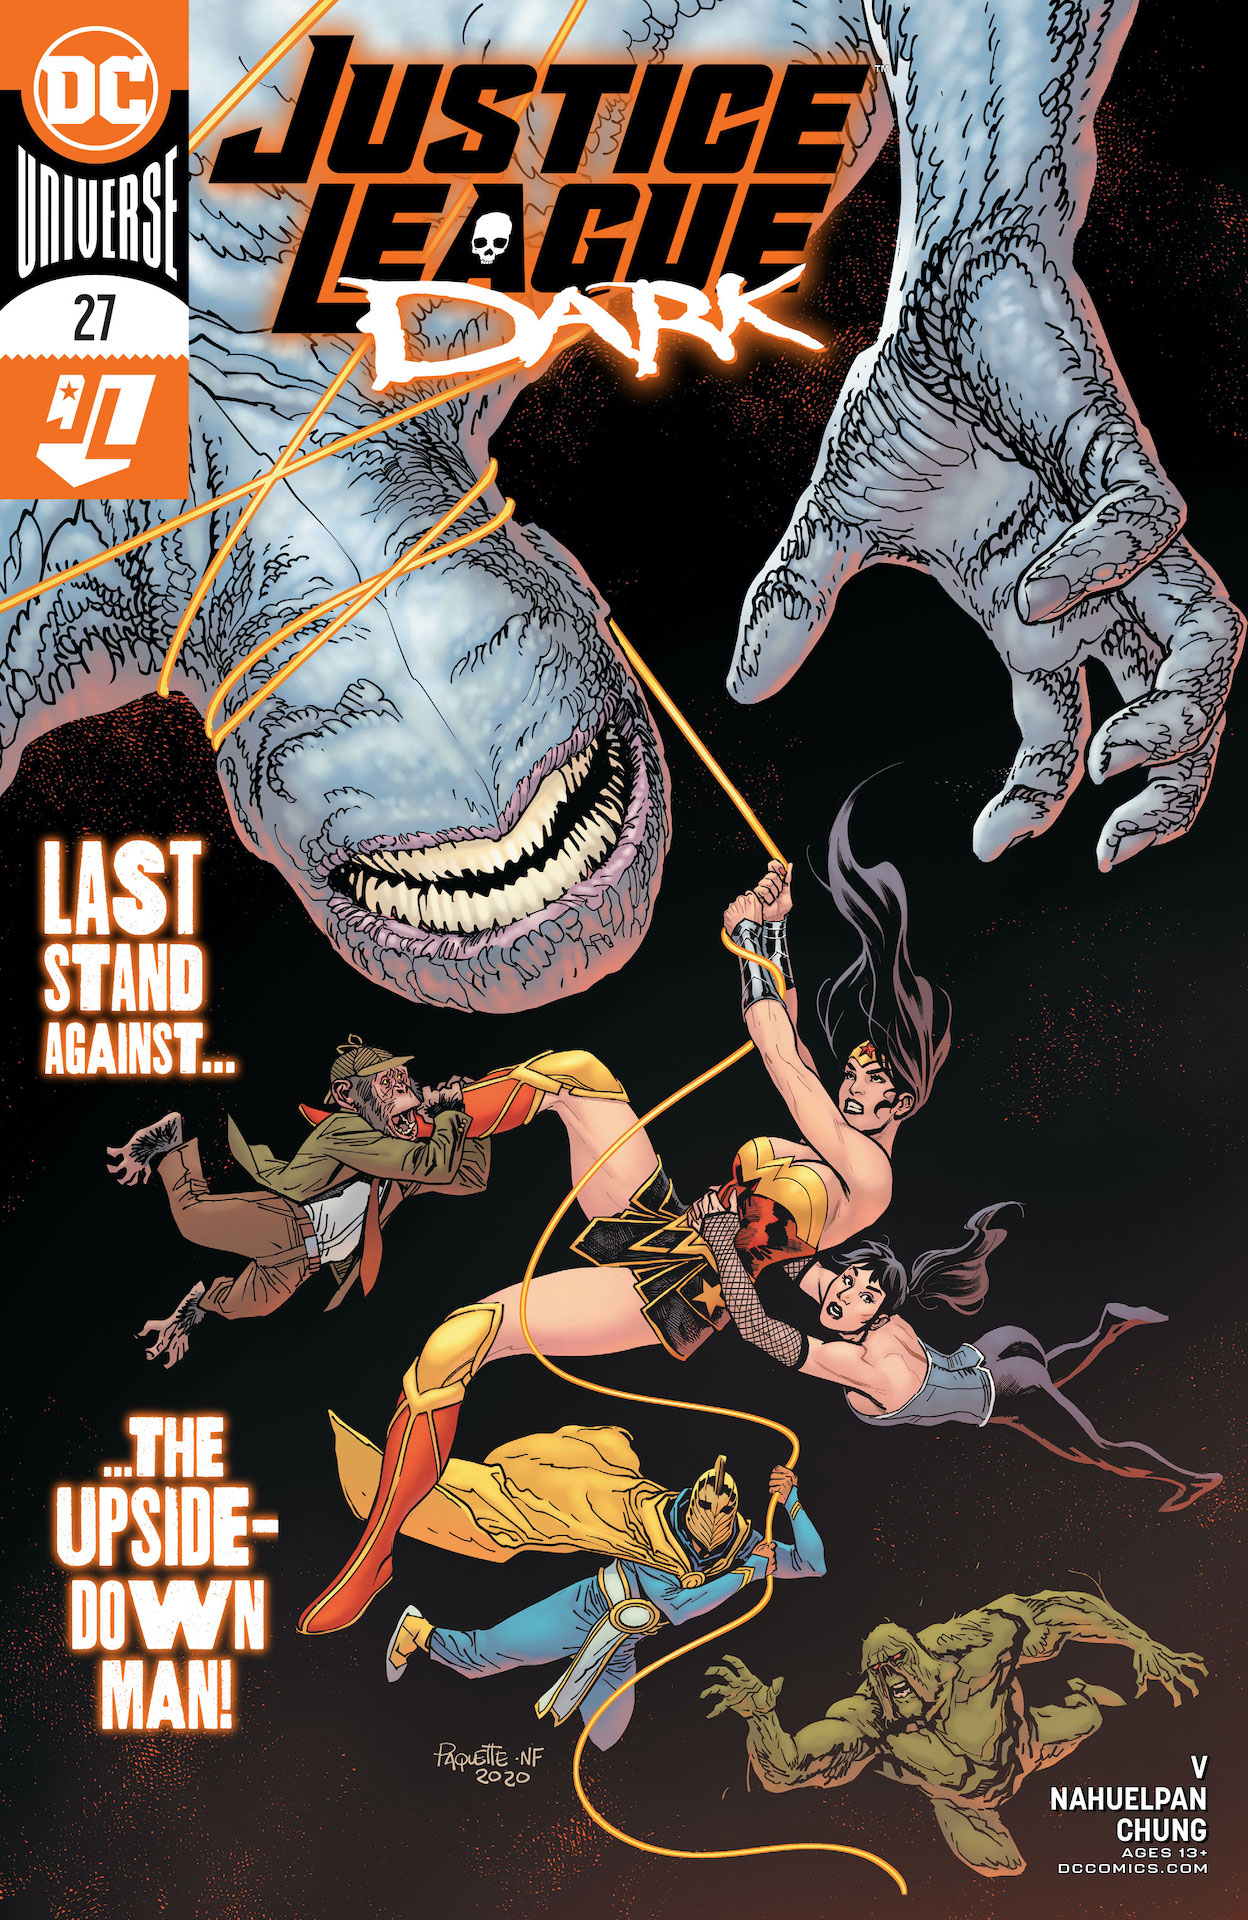 DC Preview: Justice League Dark #27